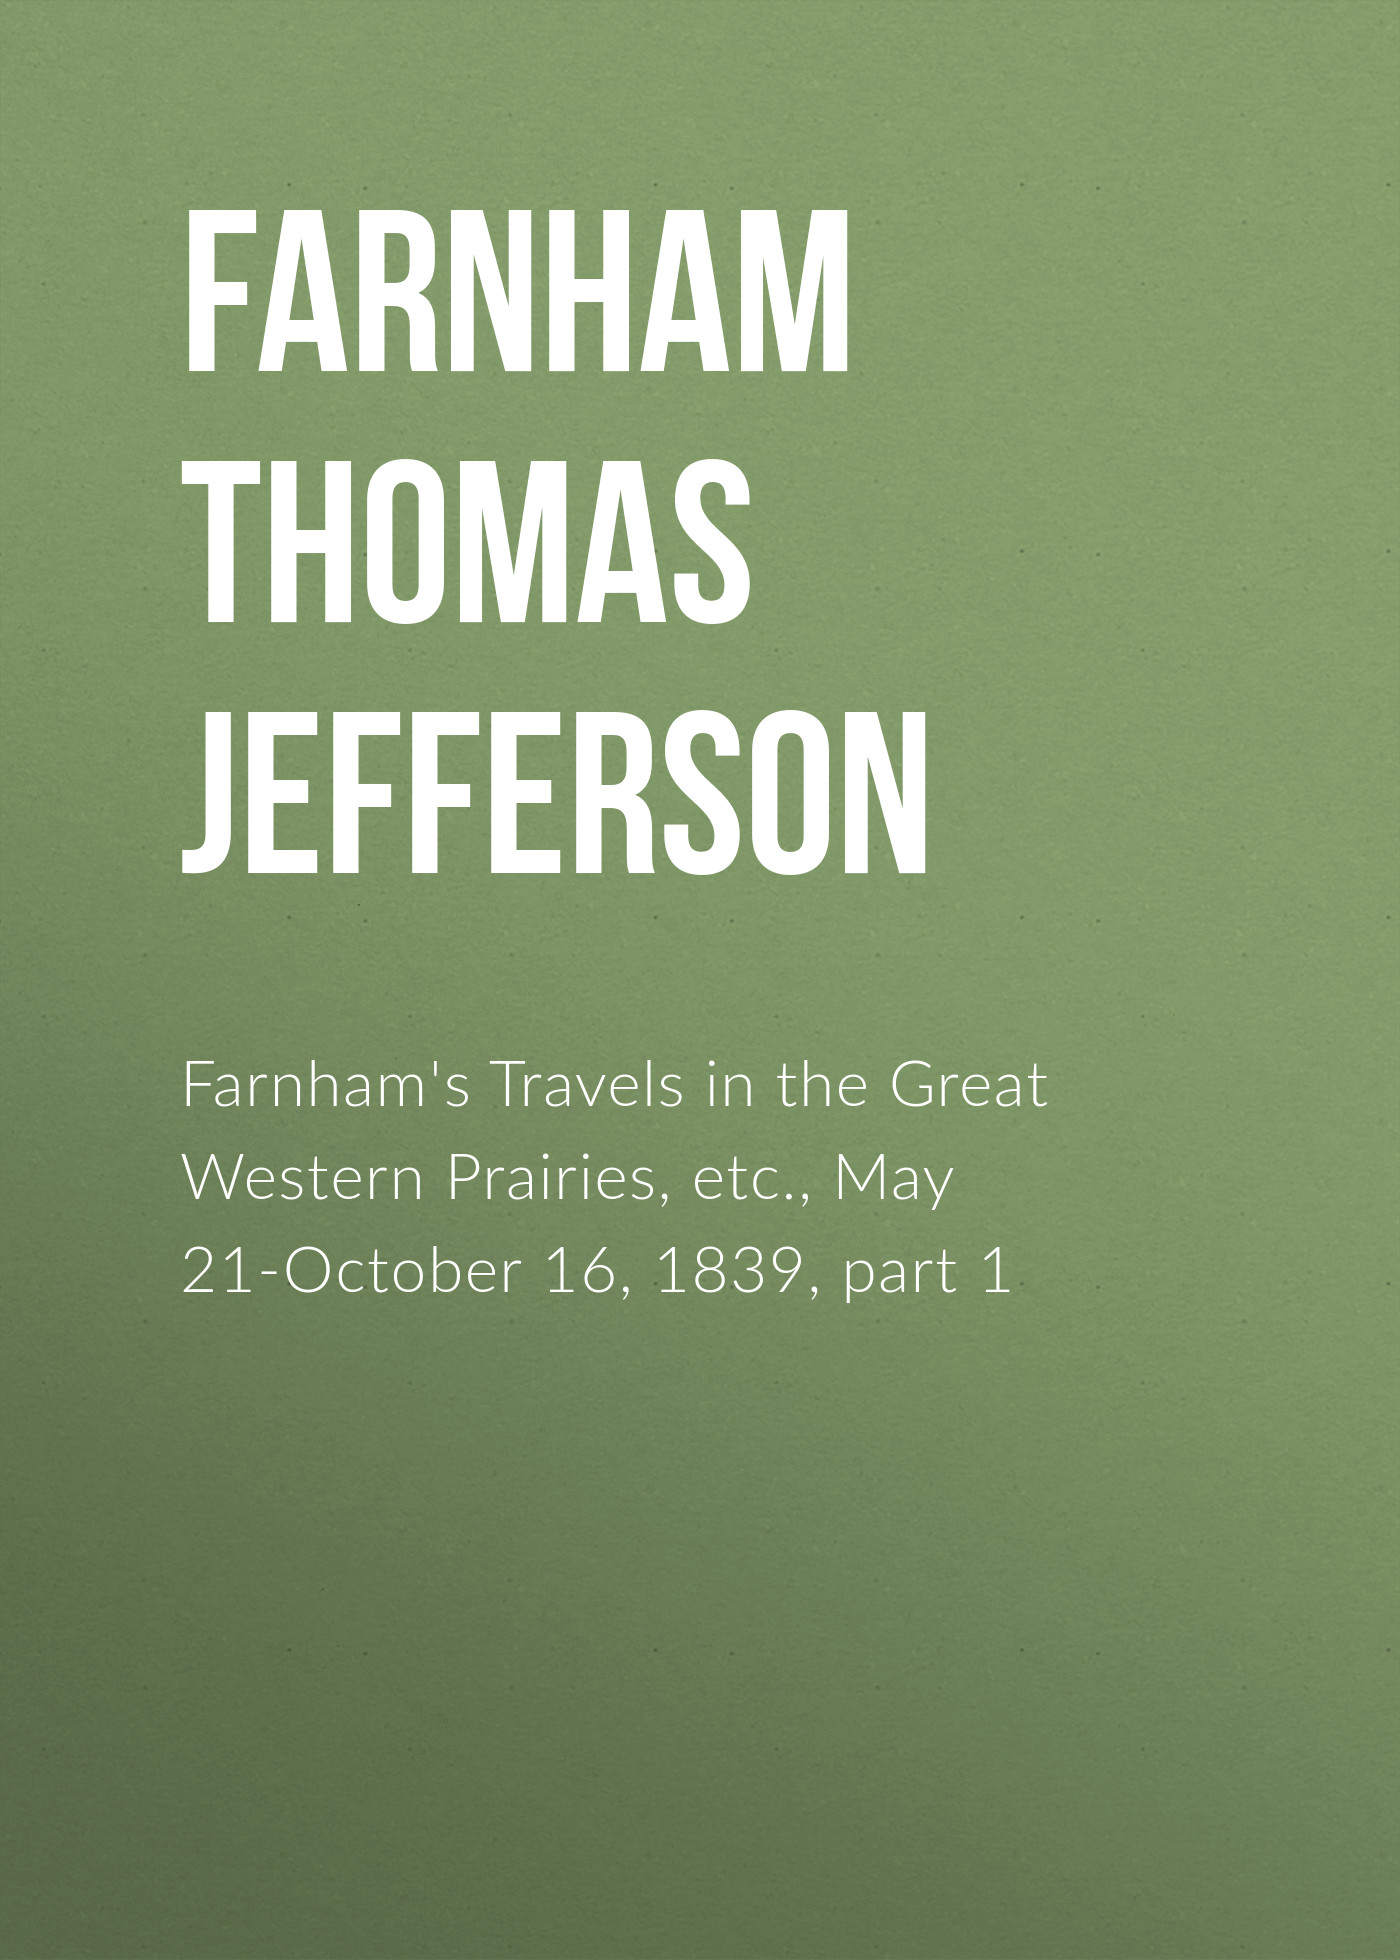 Farnham's Travels in the Great Western Prairies, etc., May 21-October 16, 1839, part 1